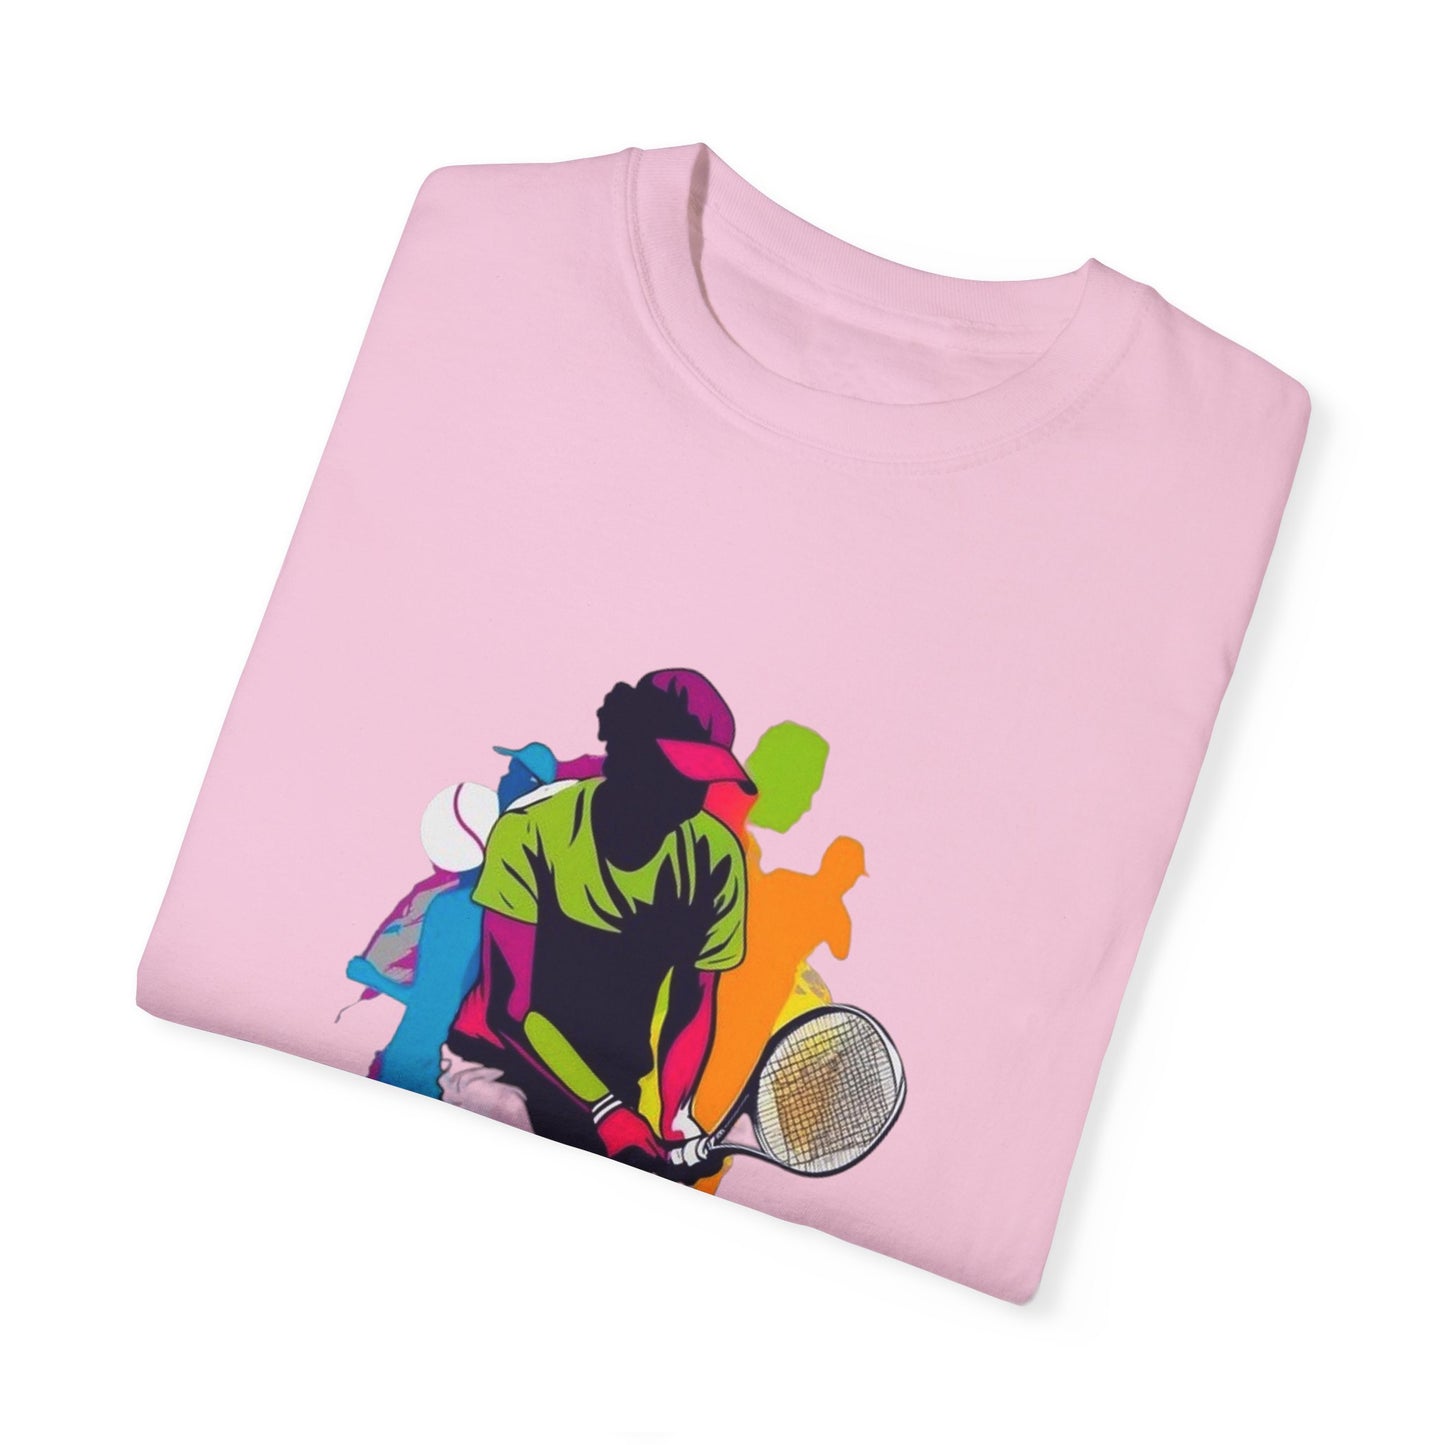 Tennis Her Way T-Shirt